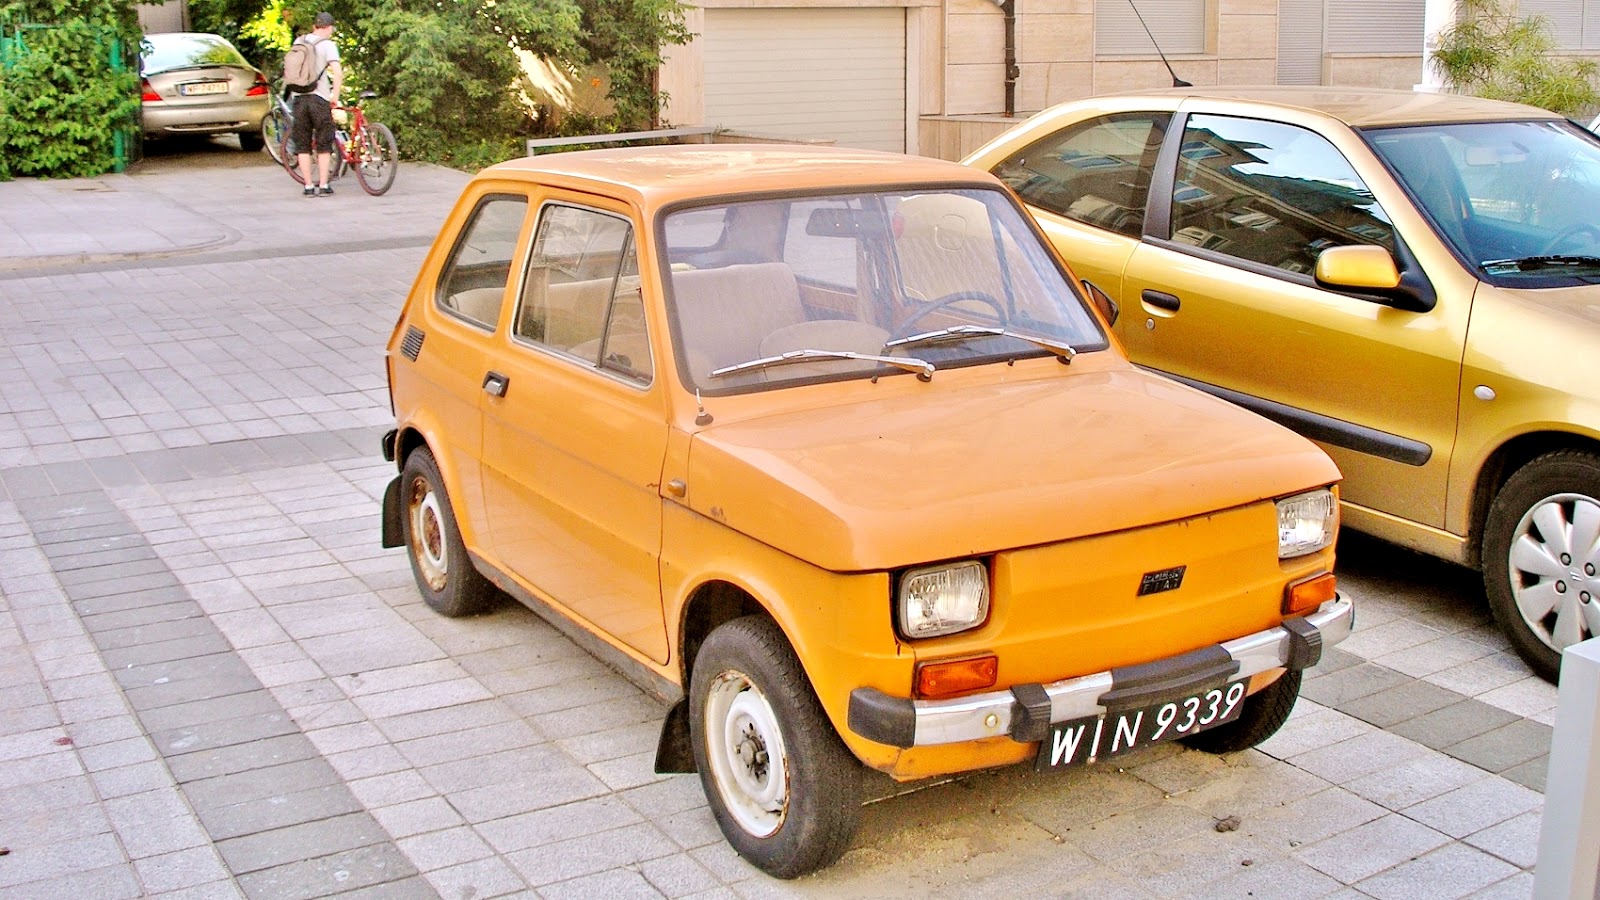 Pobliska Ulica 1981/2 Polski Fiat 126p 650S